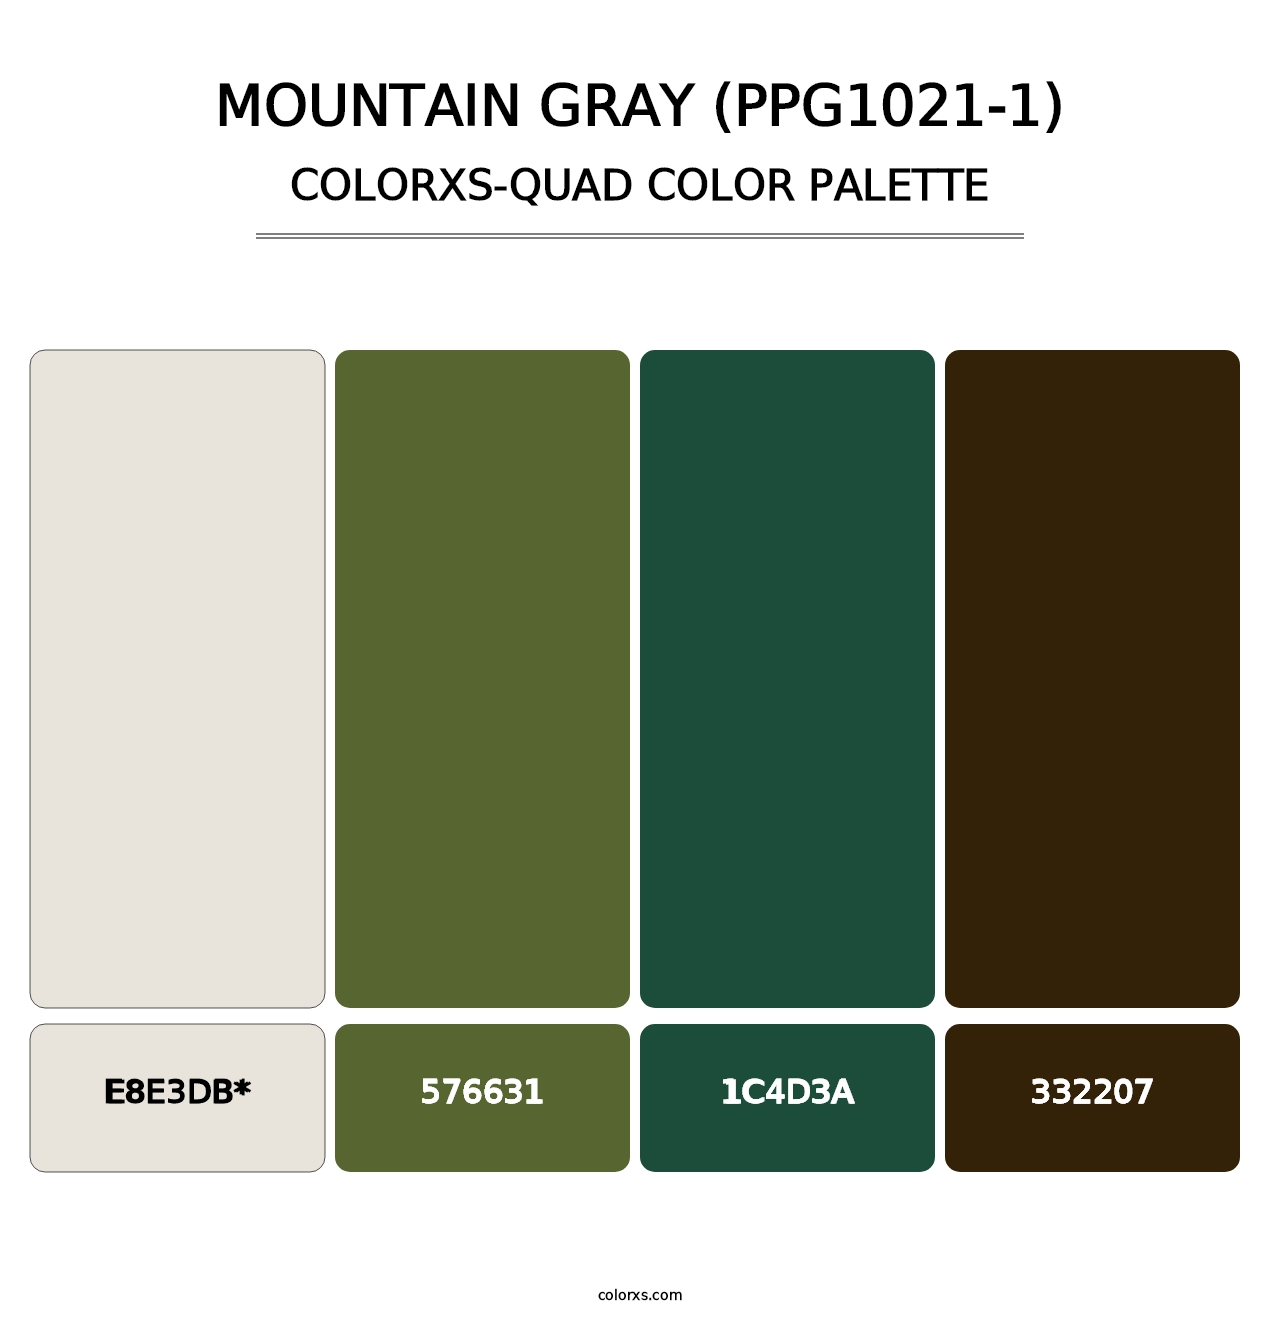 Mountain Gray (PPG1021-1) - Colorxs Quad Palette